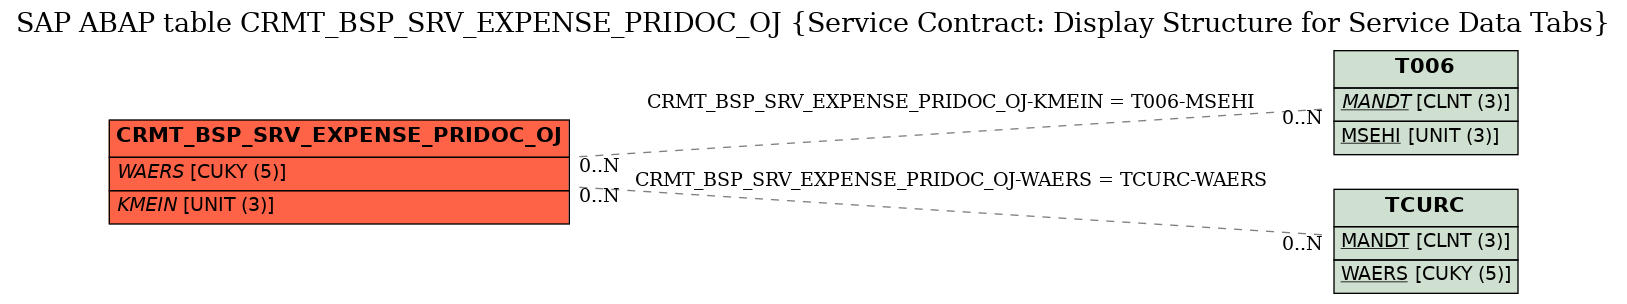 E-R Diagram for table CRMT_BSP_SRV_EXPENSE_PRIDOC_OJ (Service Contract: Display Structure for Service Data Tabs)